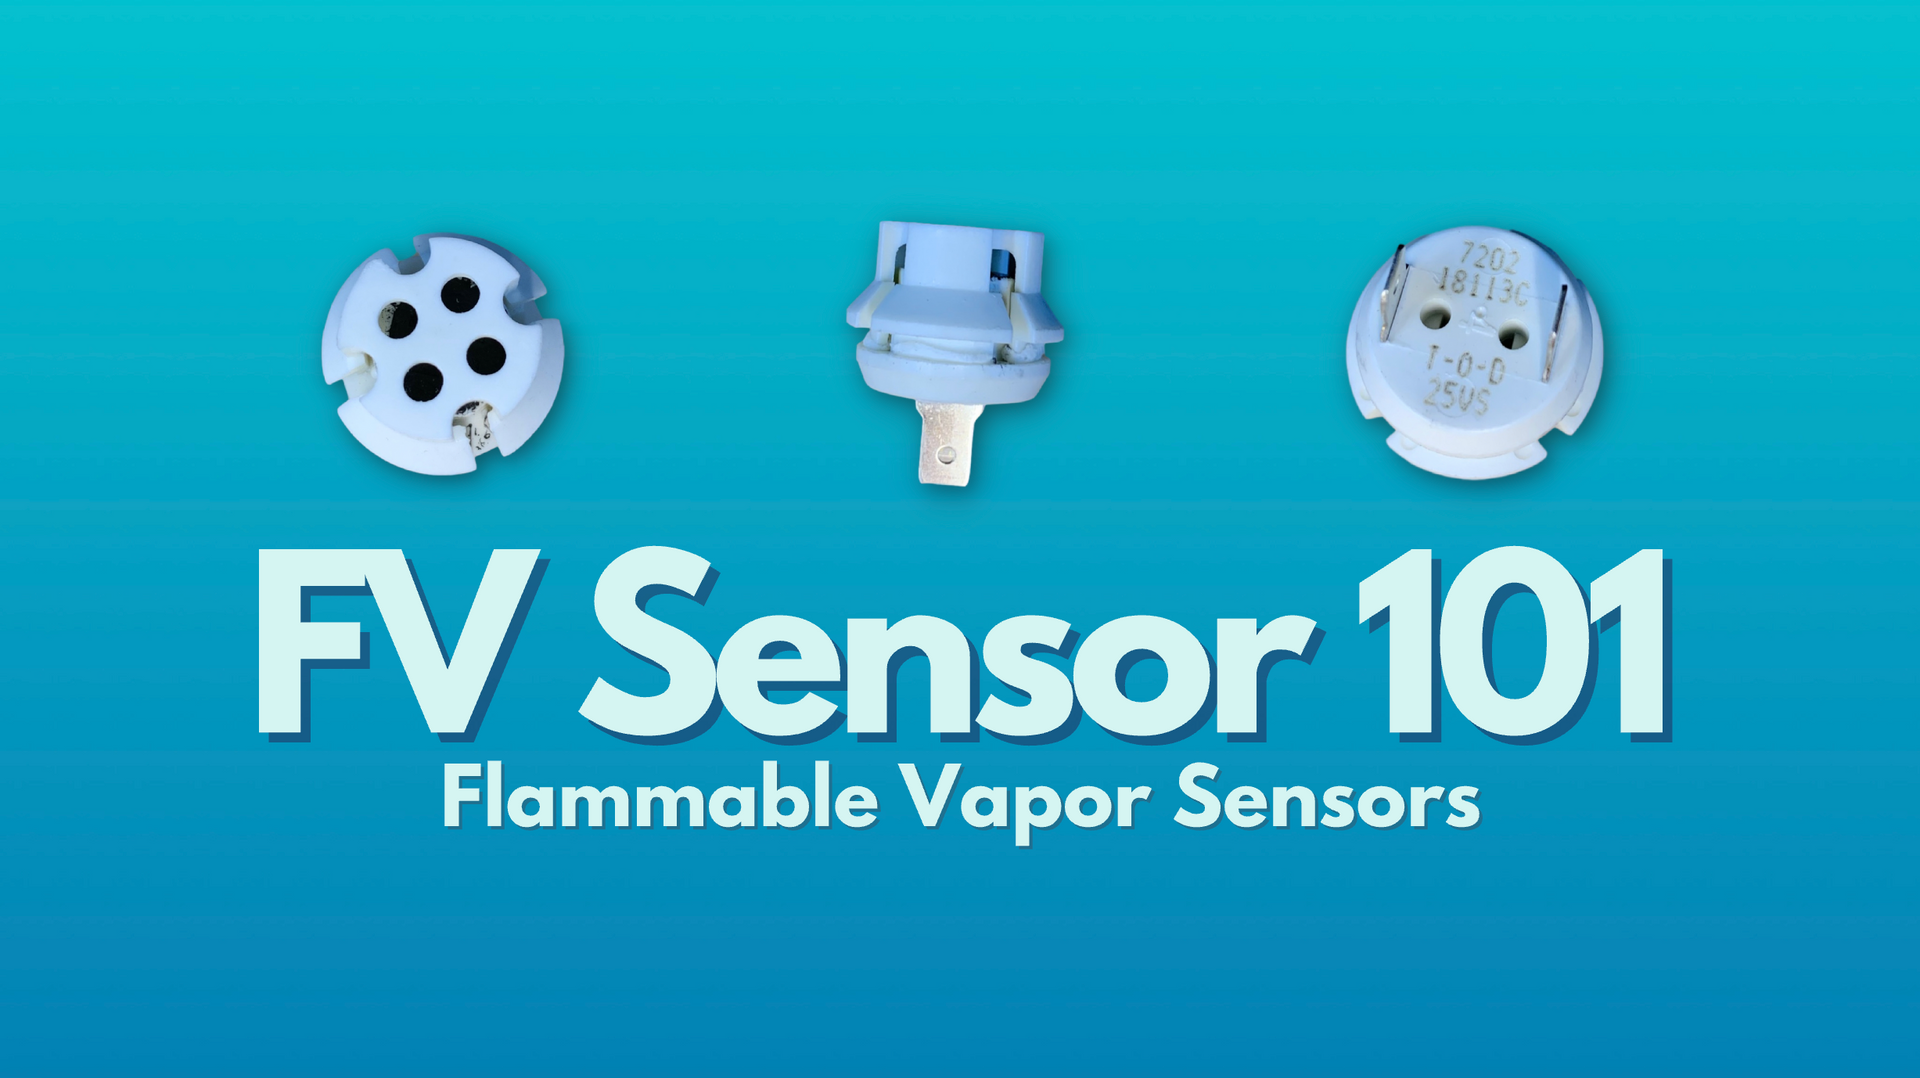 Flammable Vapor Sensor / FV Sensor top, side views with text FV Sensor 101